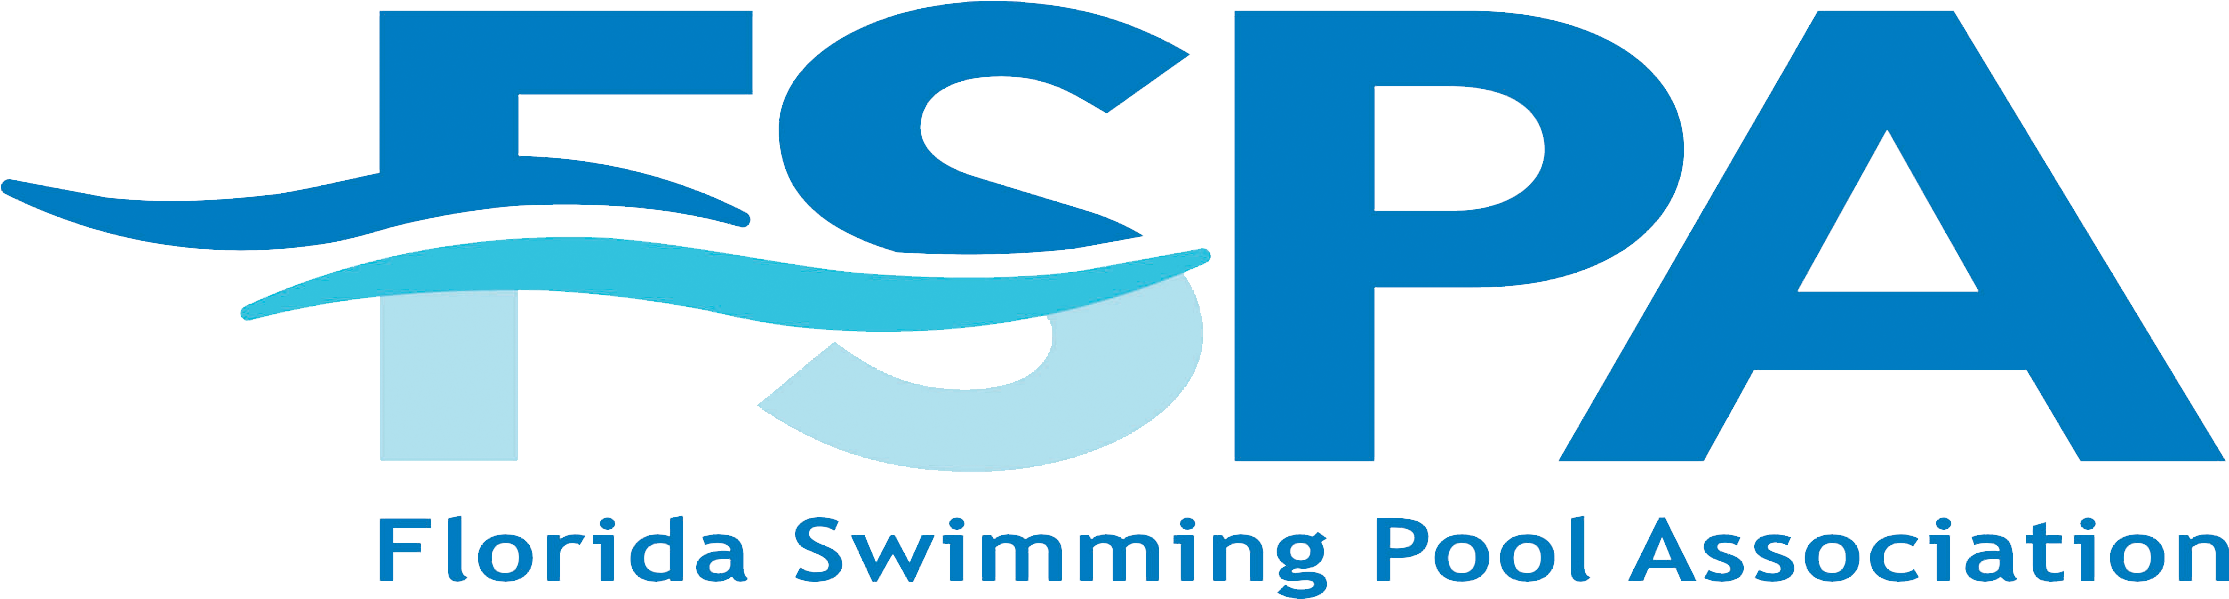 Abc Abc Abc Abc - Florida Swimming Pool Association (2304x669)